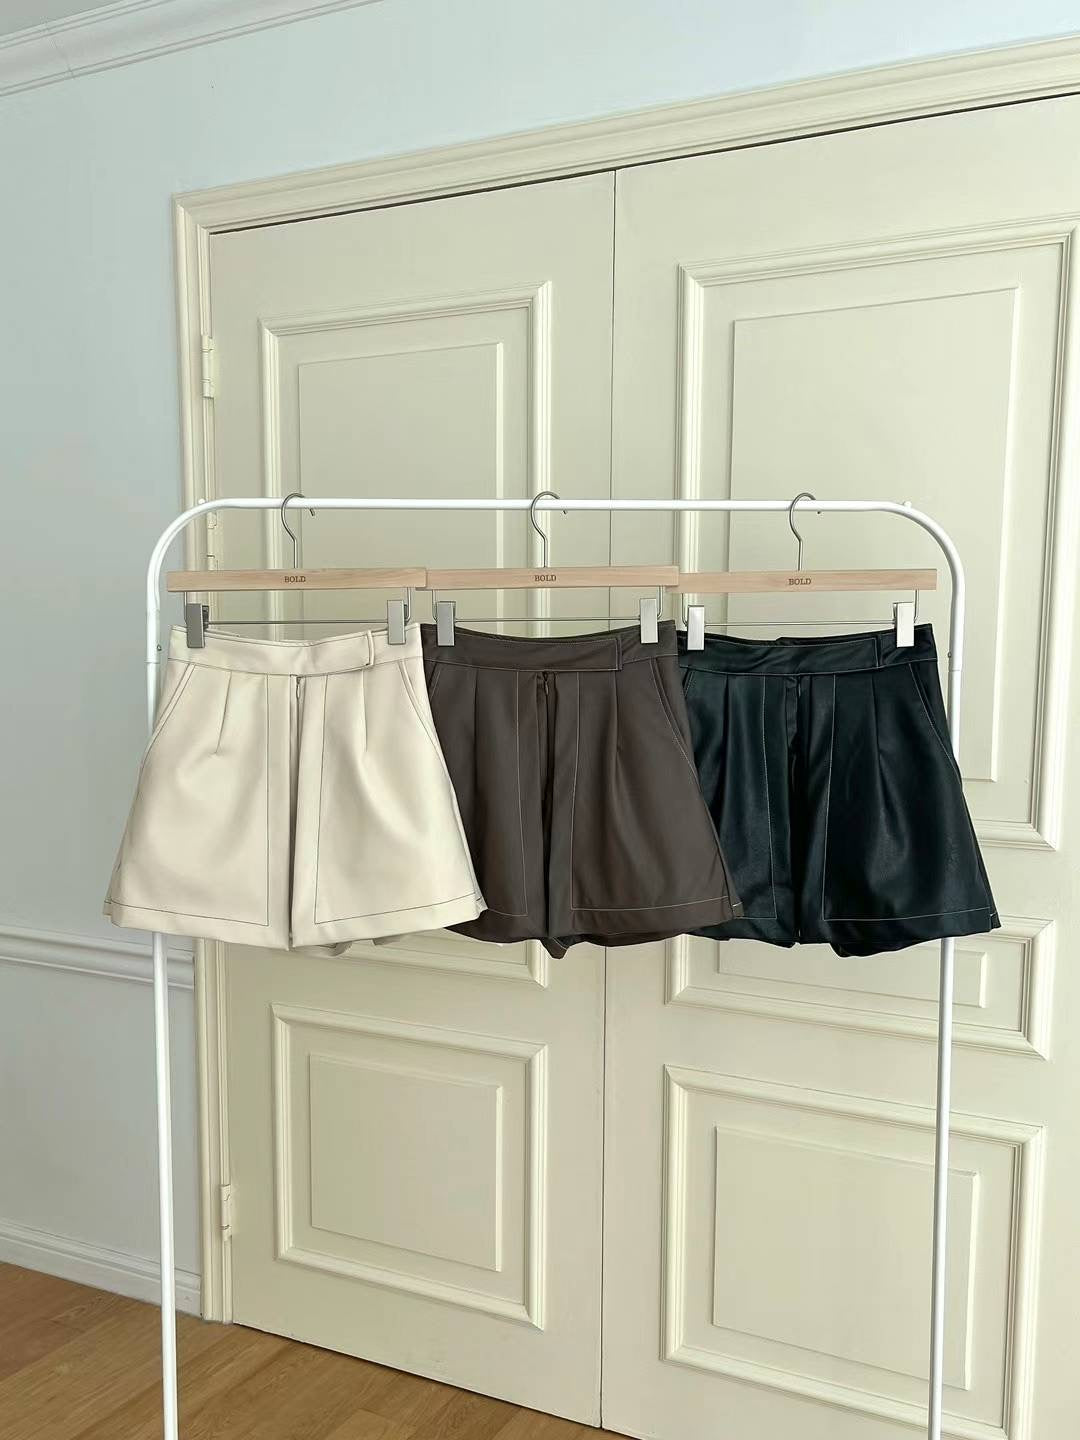 Slit Leather Skirt Shorts